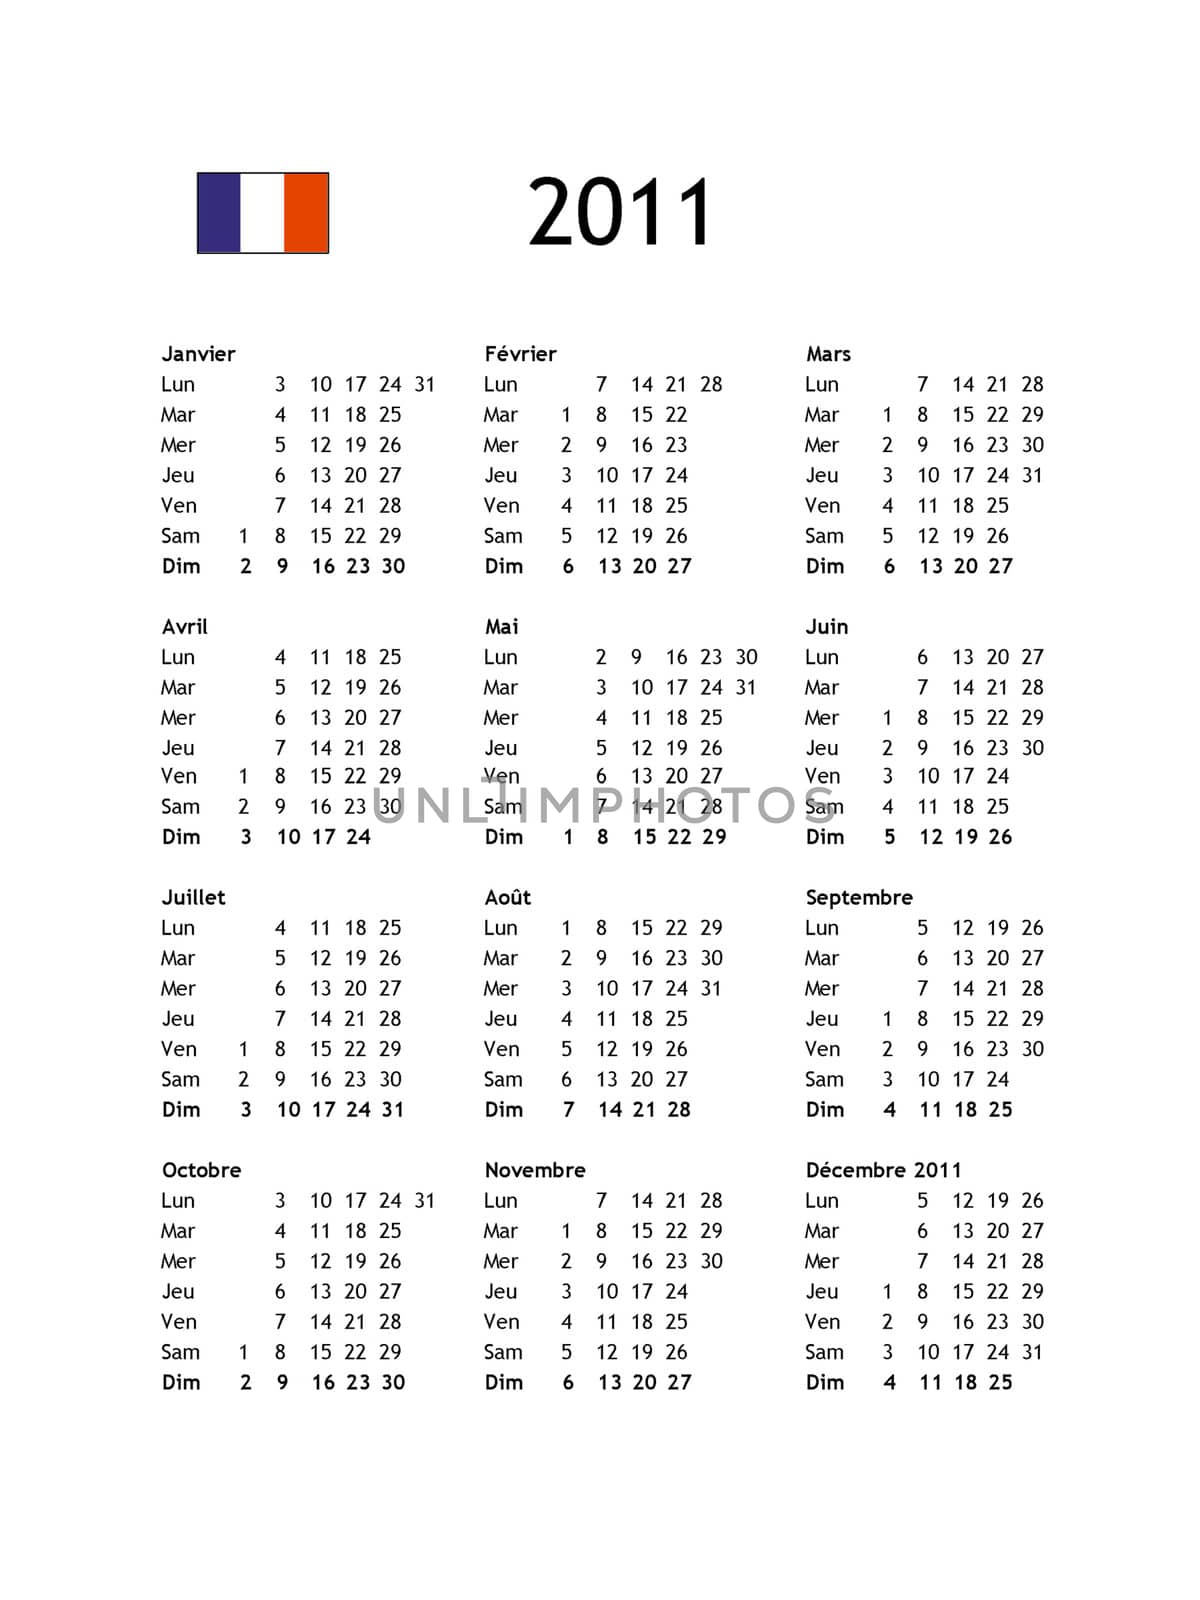 French calendar by claudiodivizia